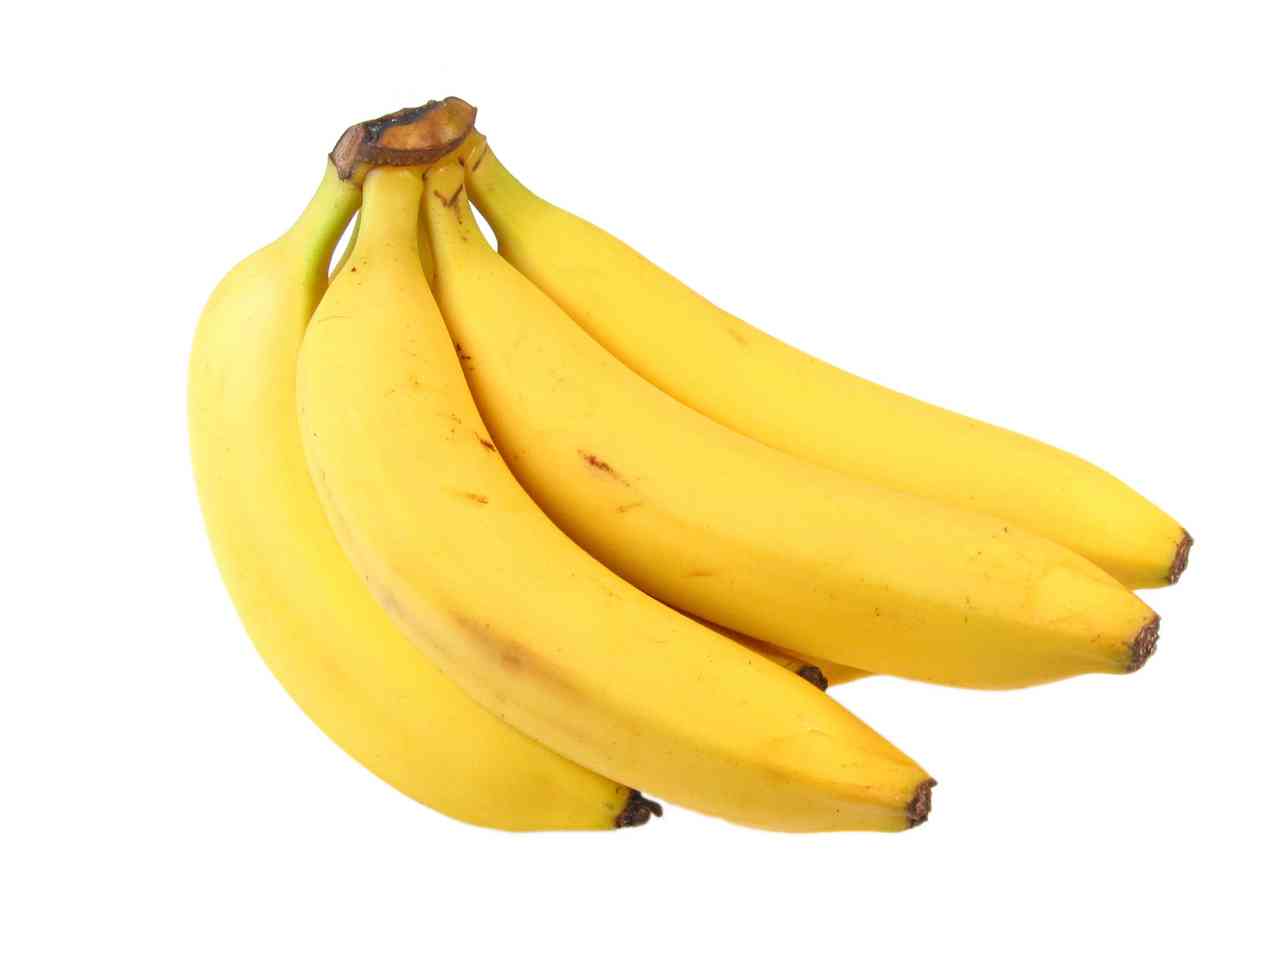 A bunch of ripe bananas.